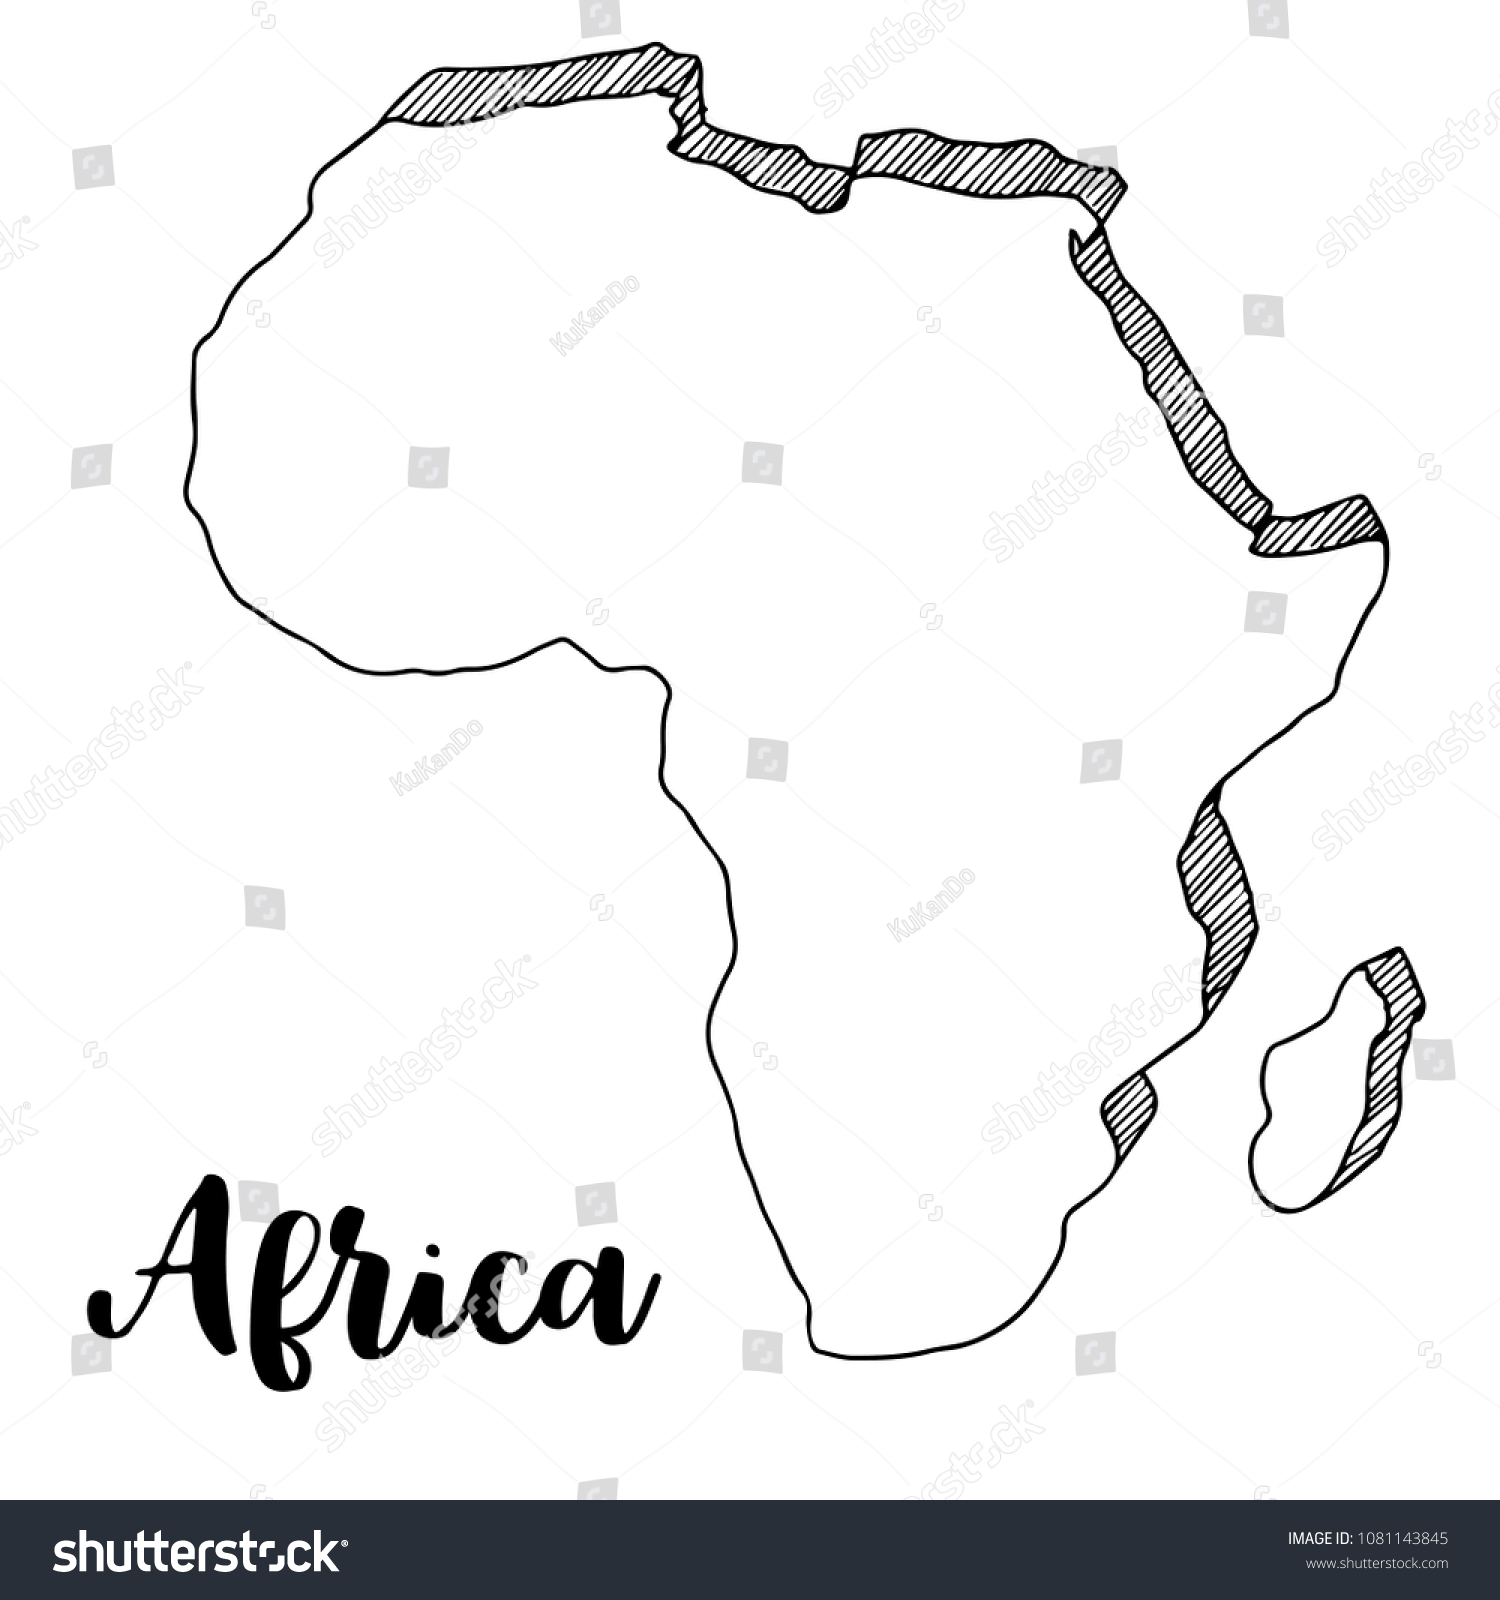 Карта Африки рисунок